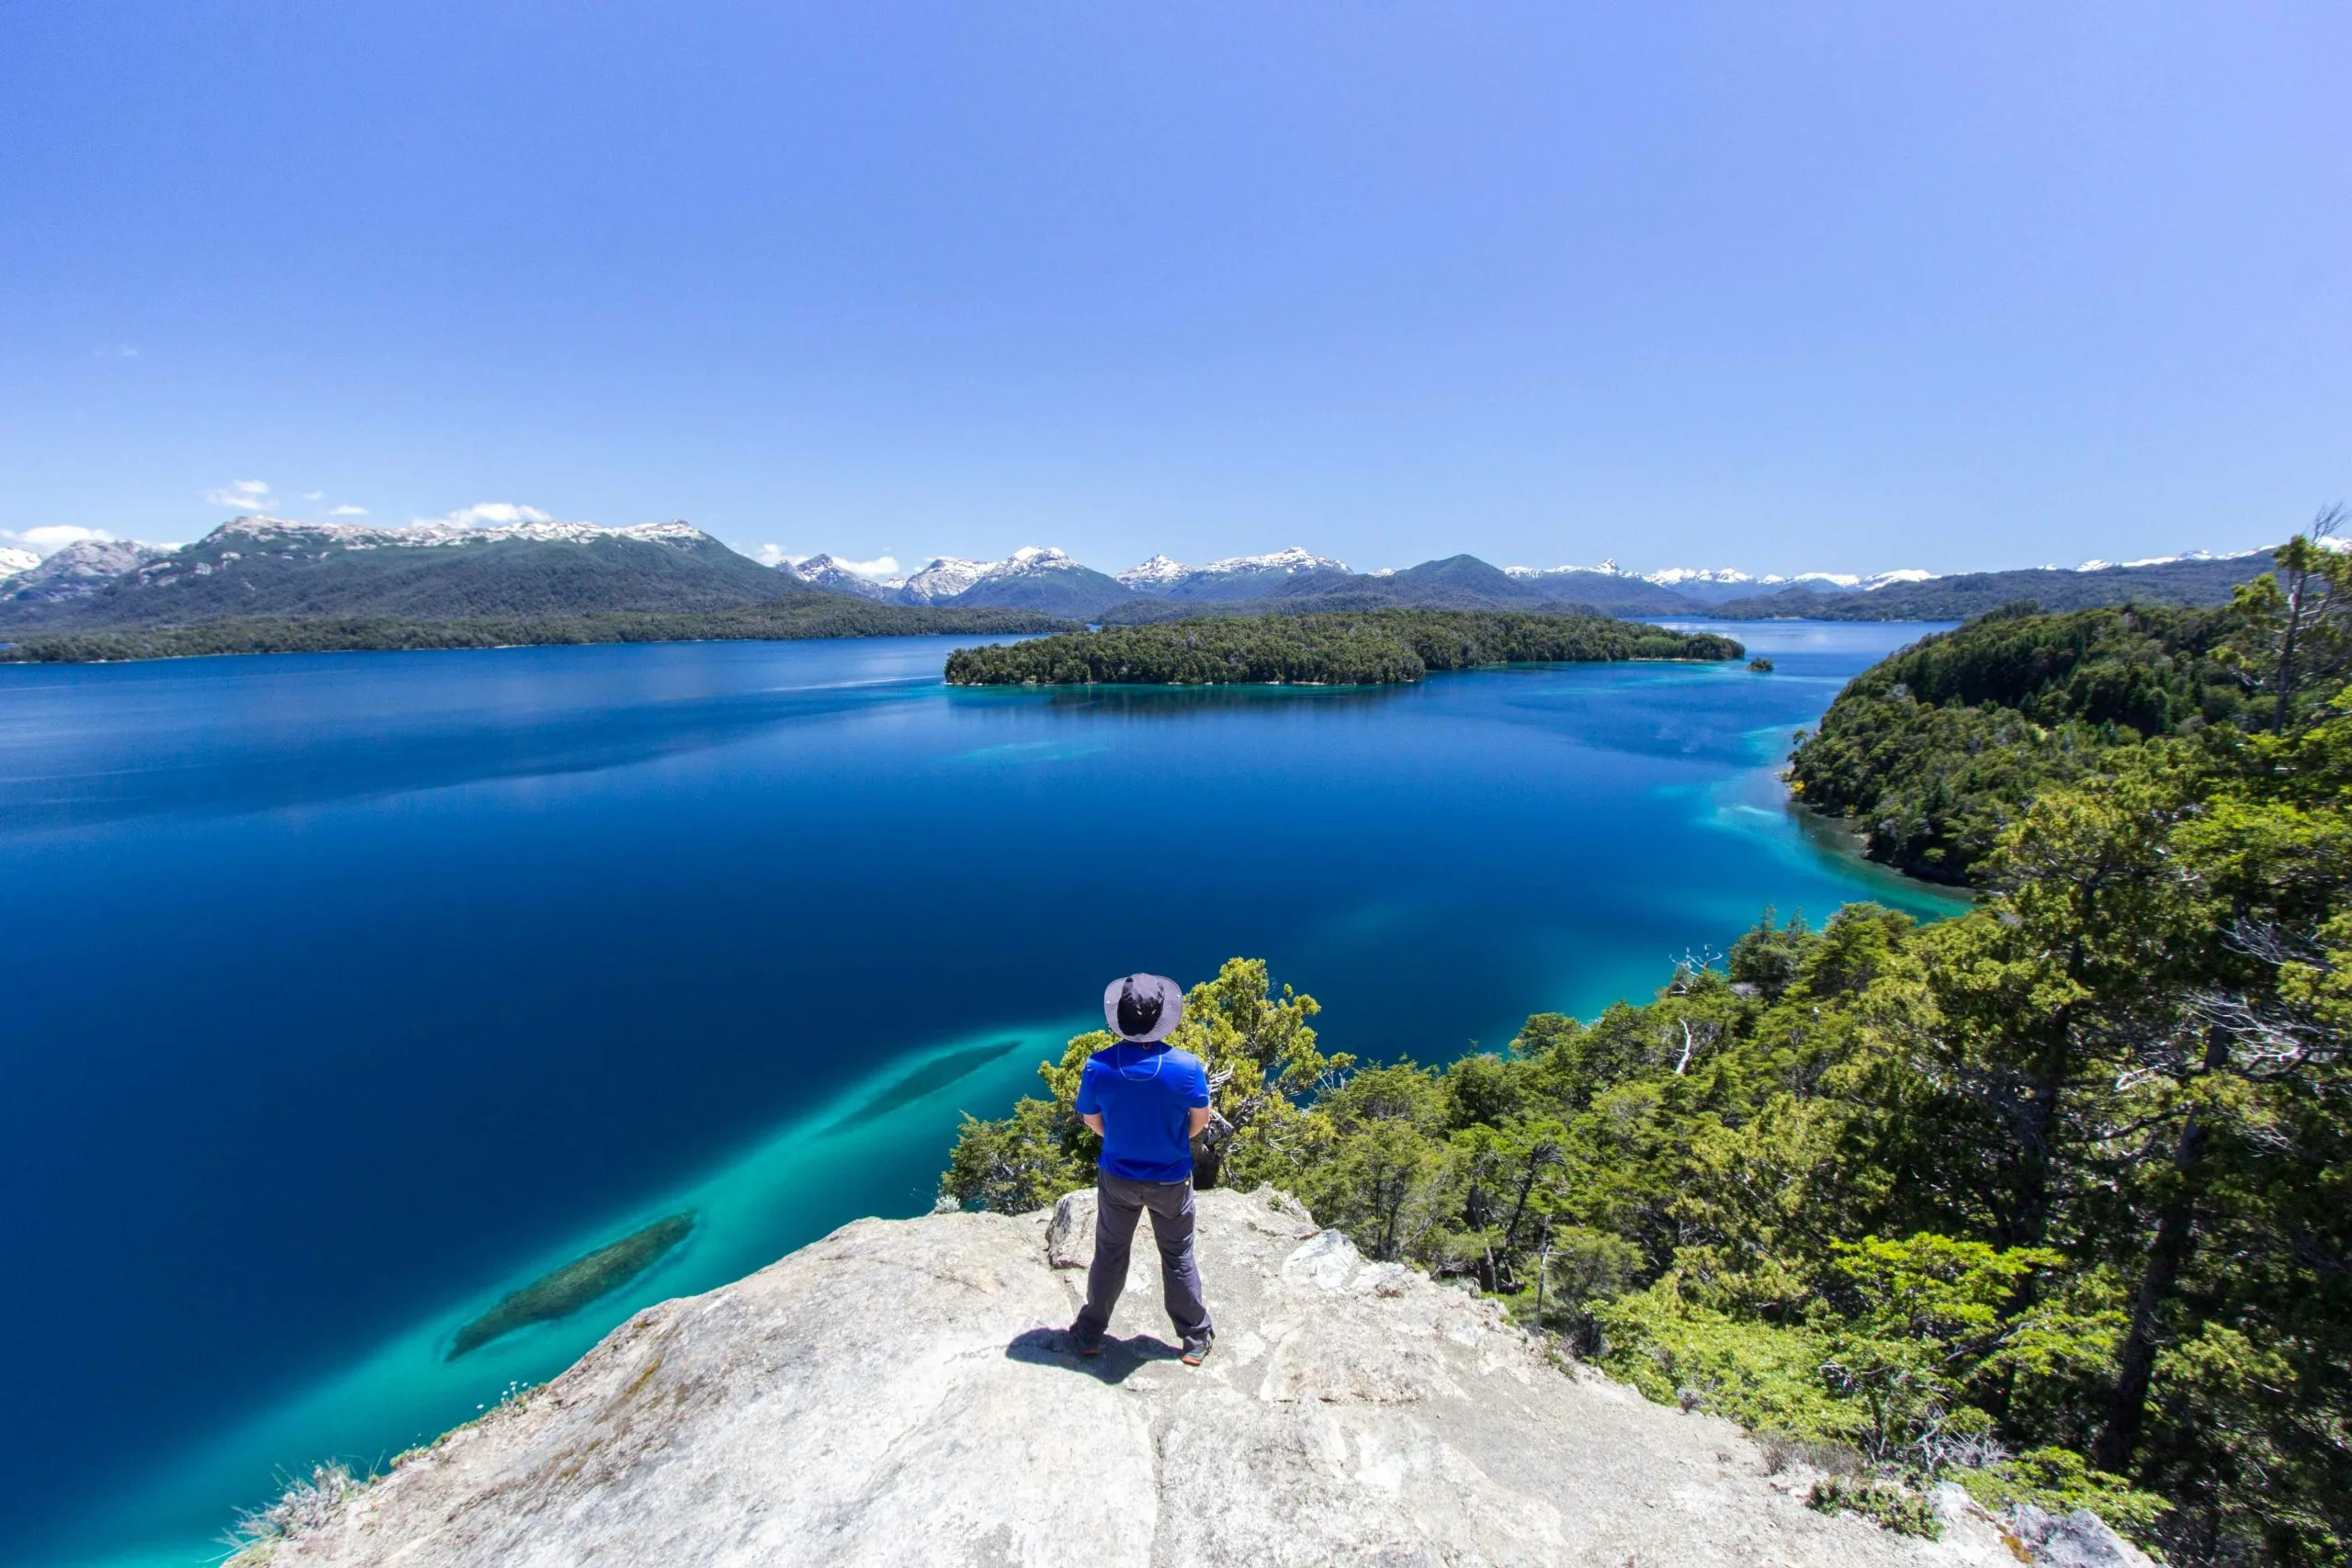 Brazo Norte landscape of Nahuel Huapi Lake in Villa La Angostura, Patagonia Argentina